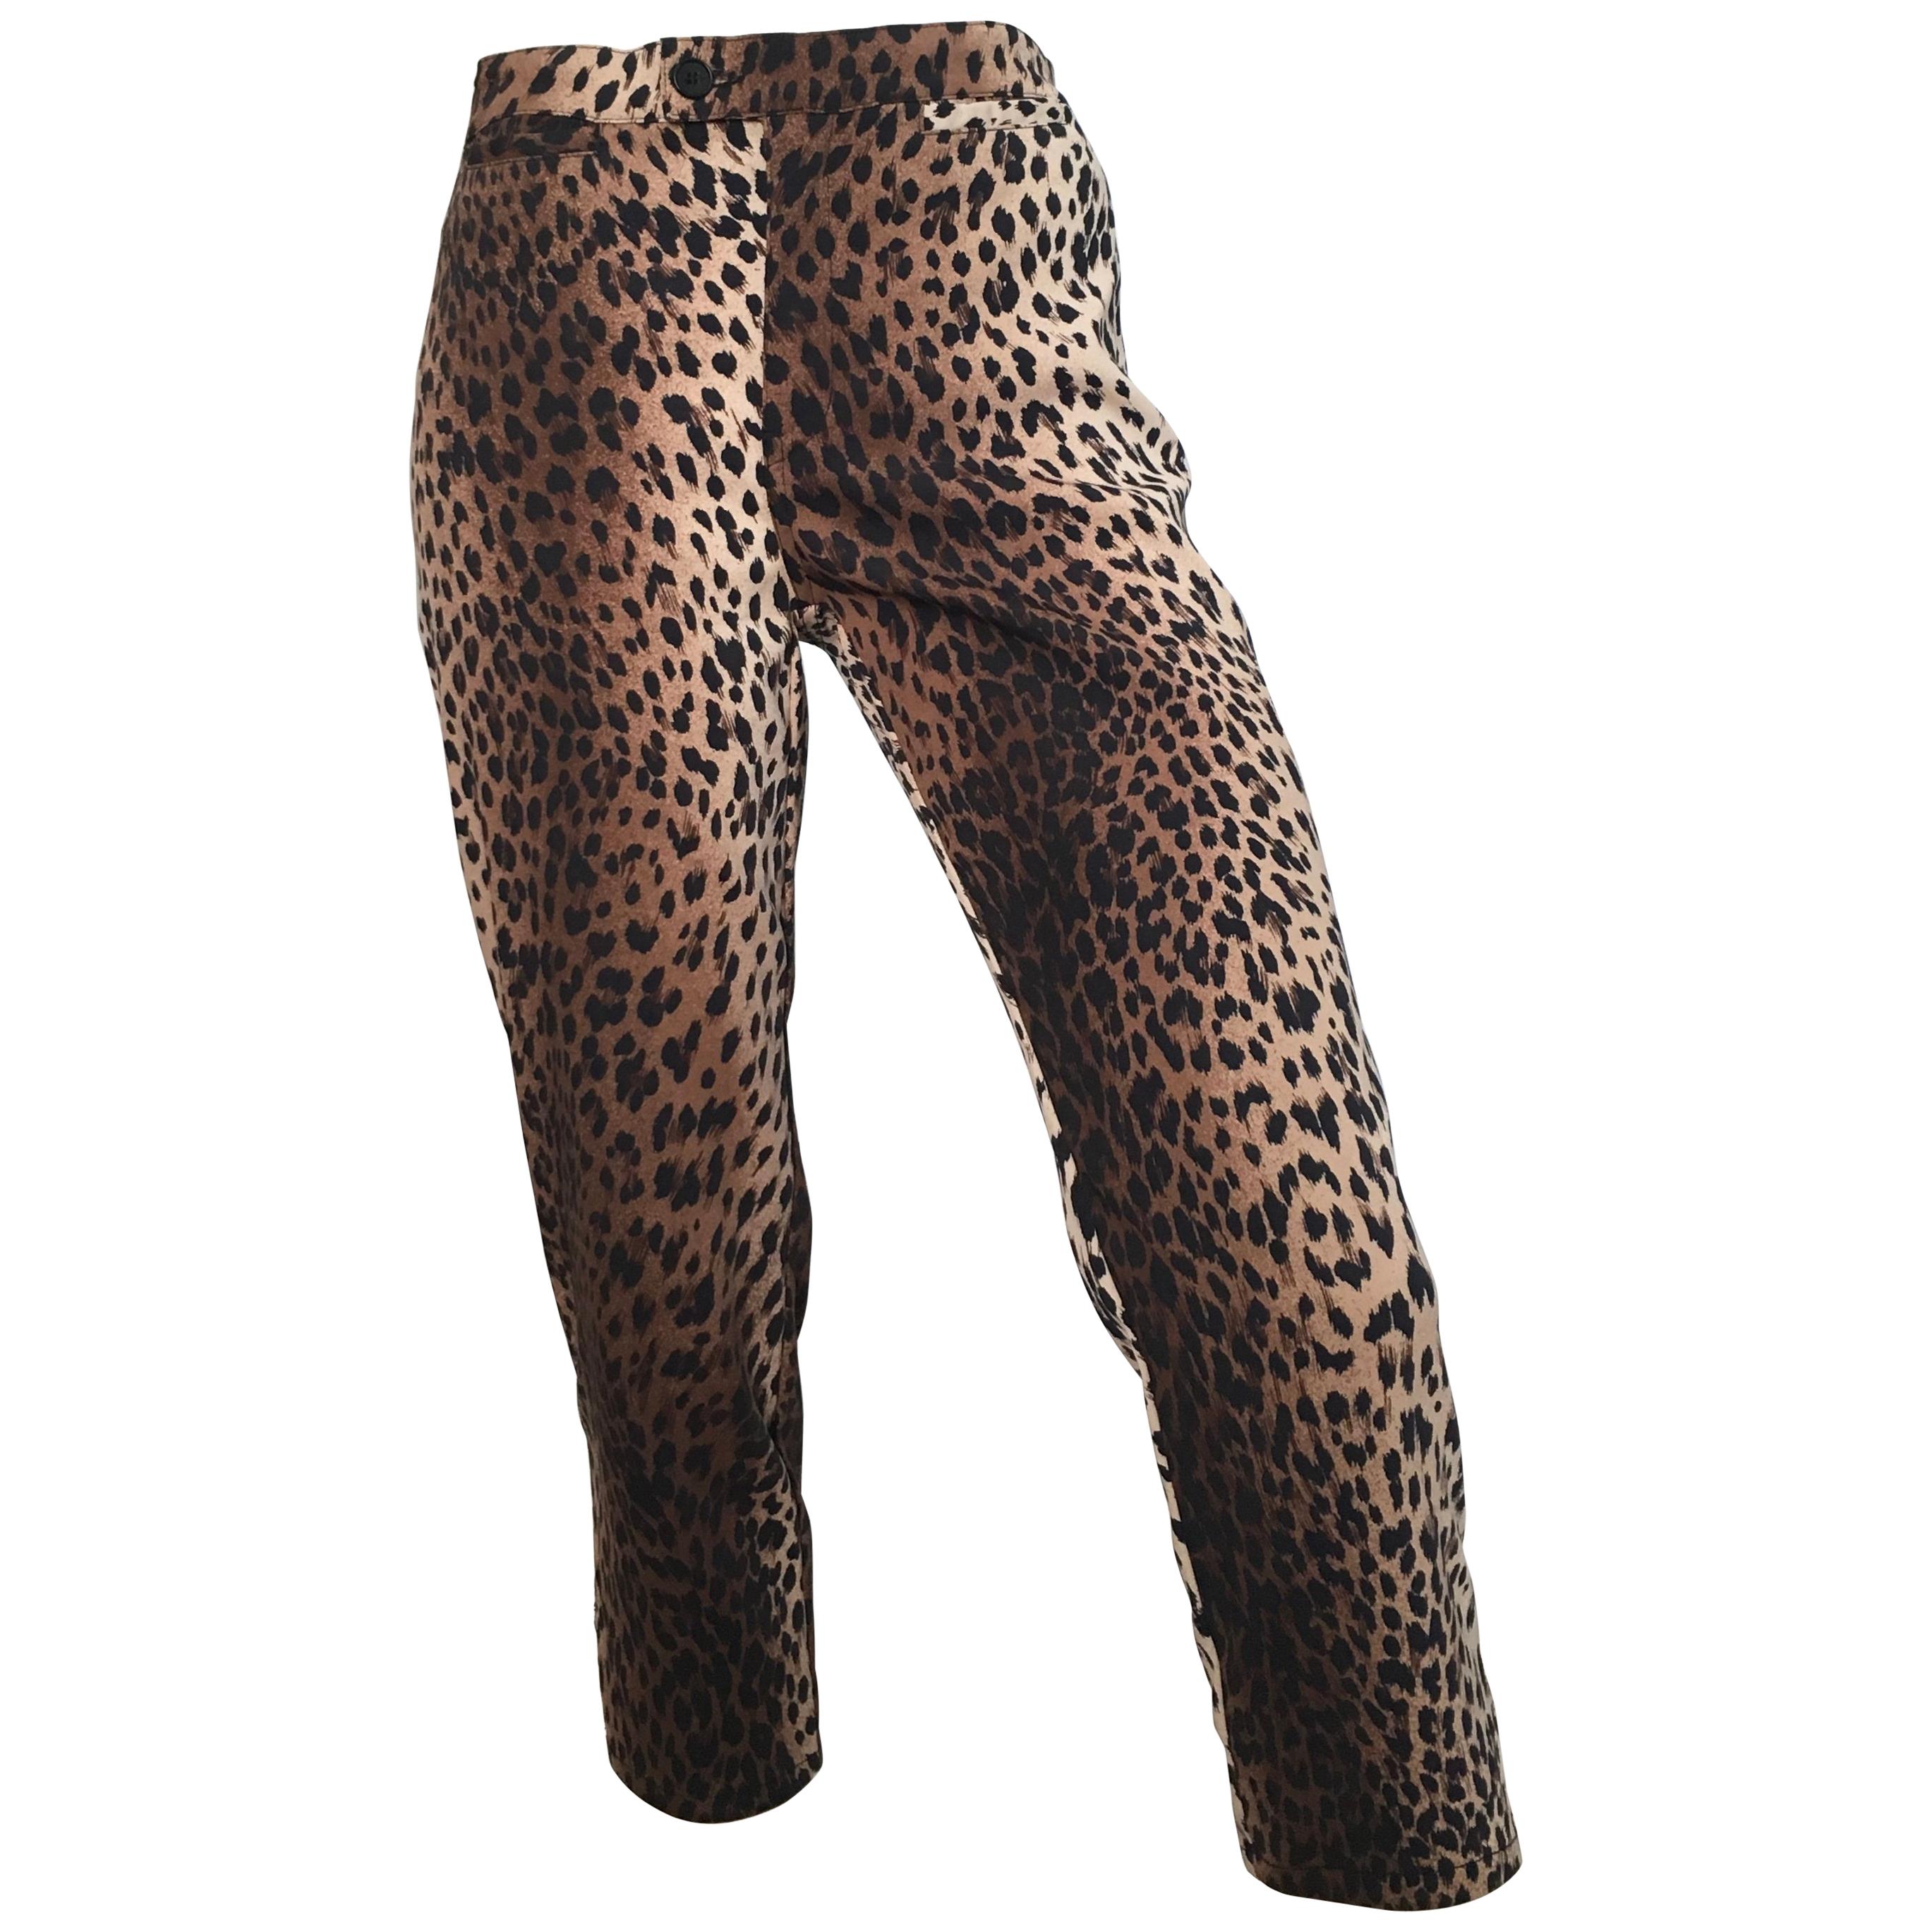 MOSCHINO Cheetah Print Capri Pants Size 8. For Sale